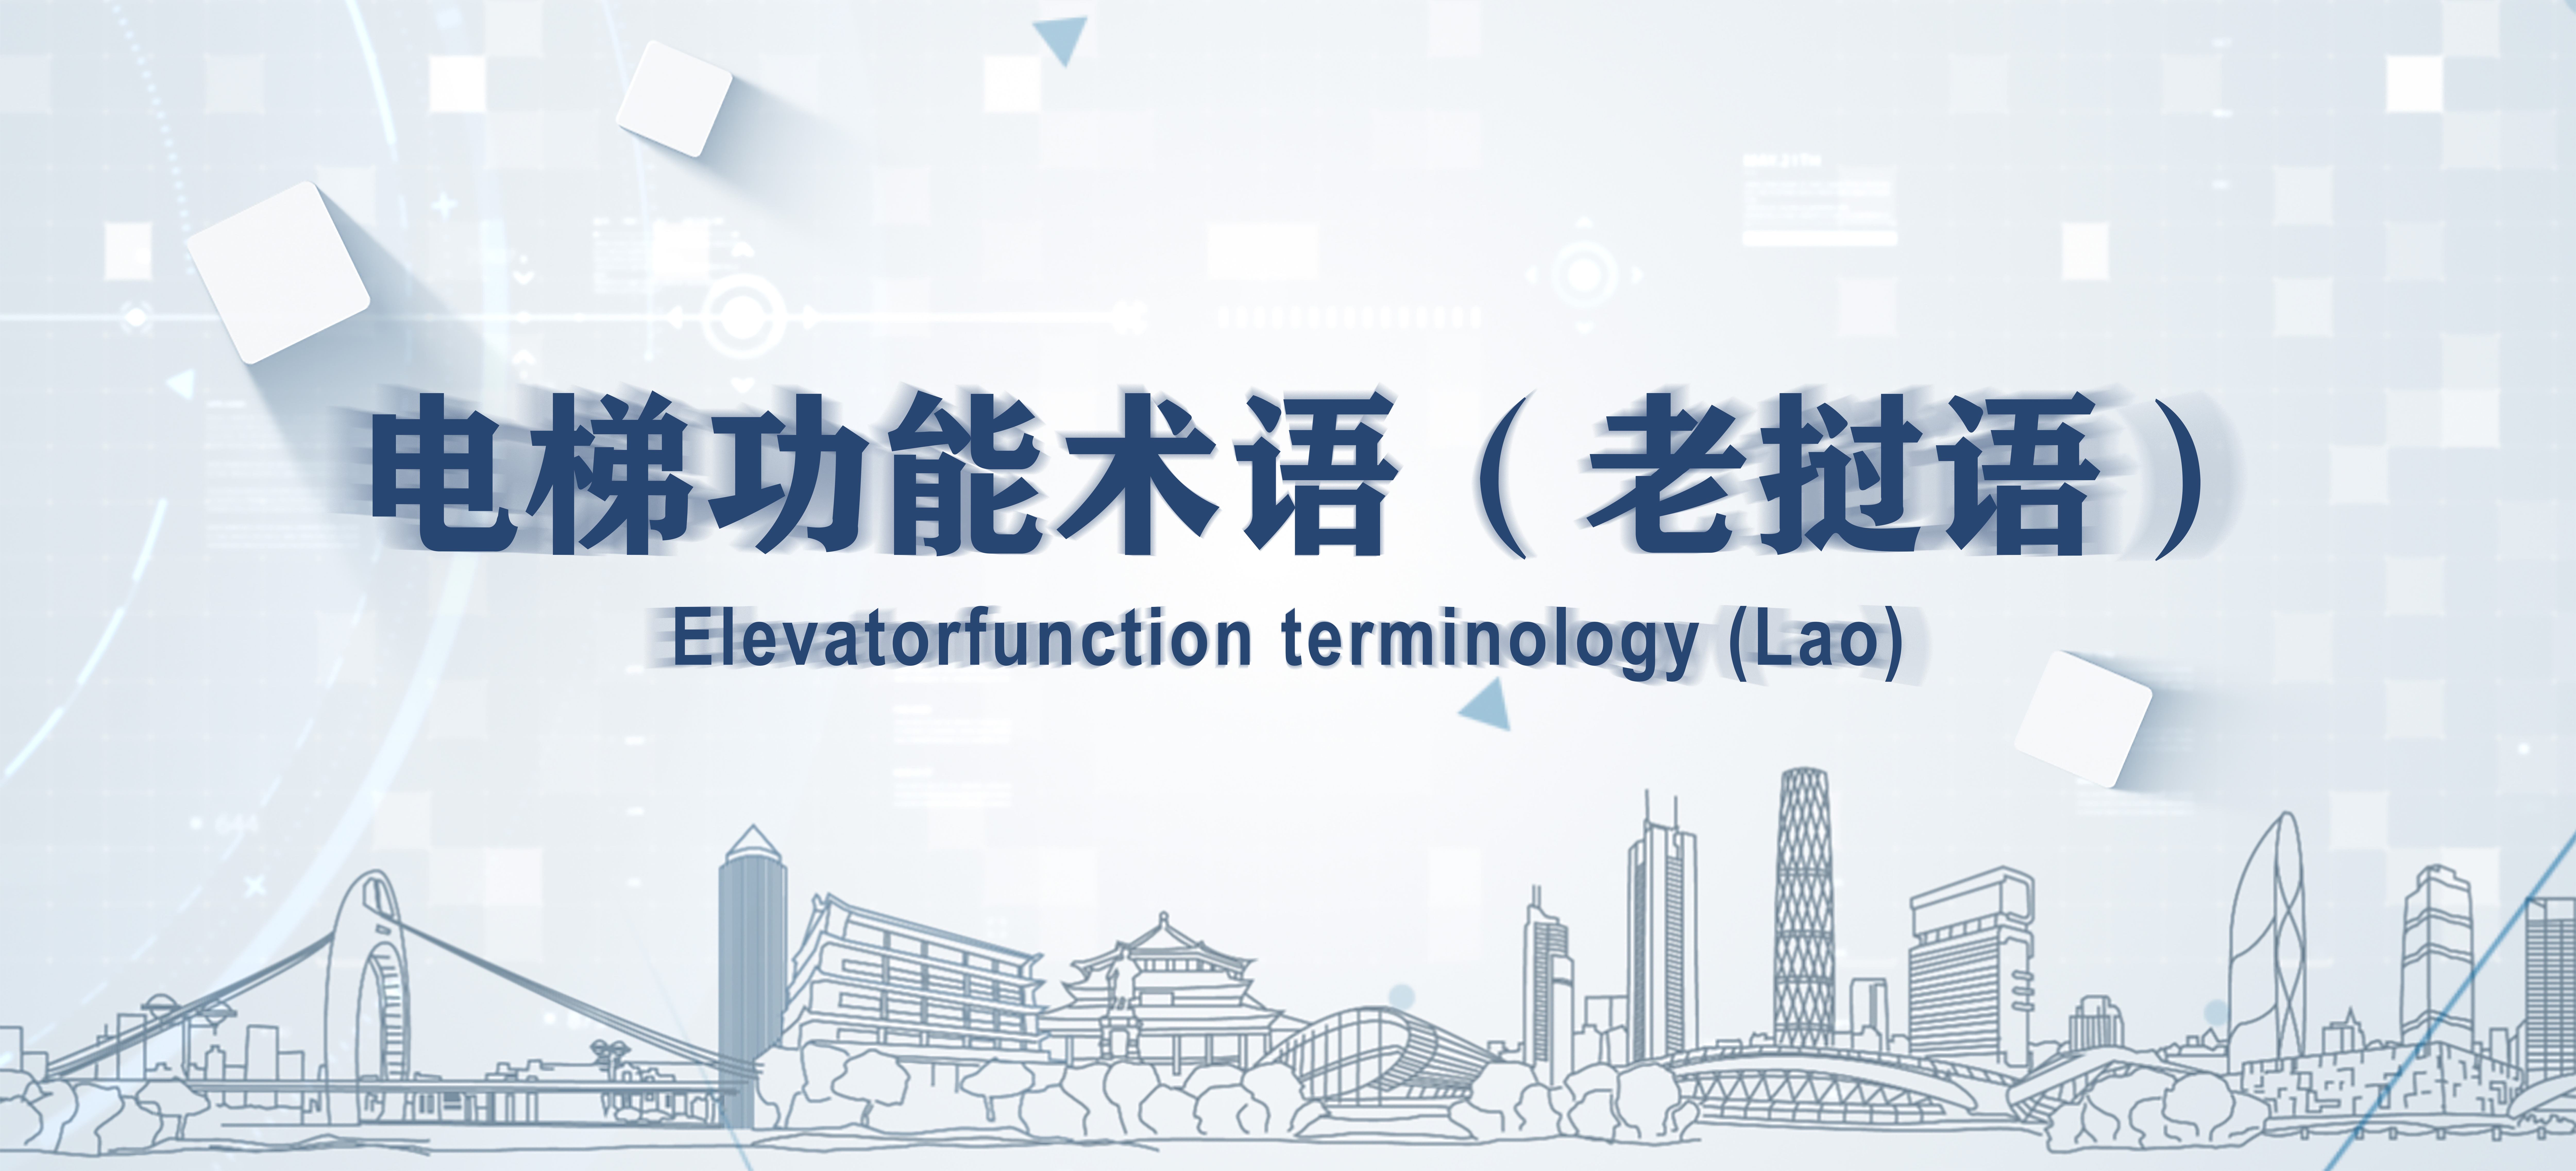 Elevator function terminology (Lao)